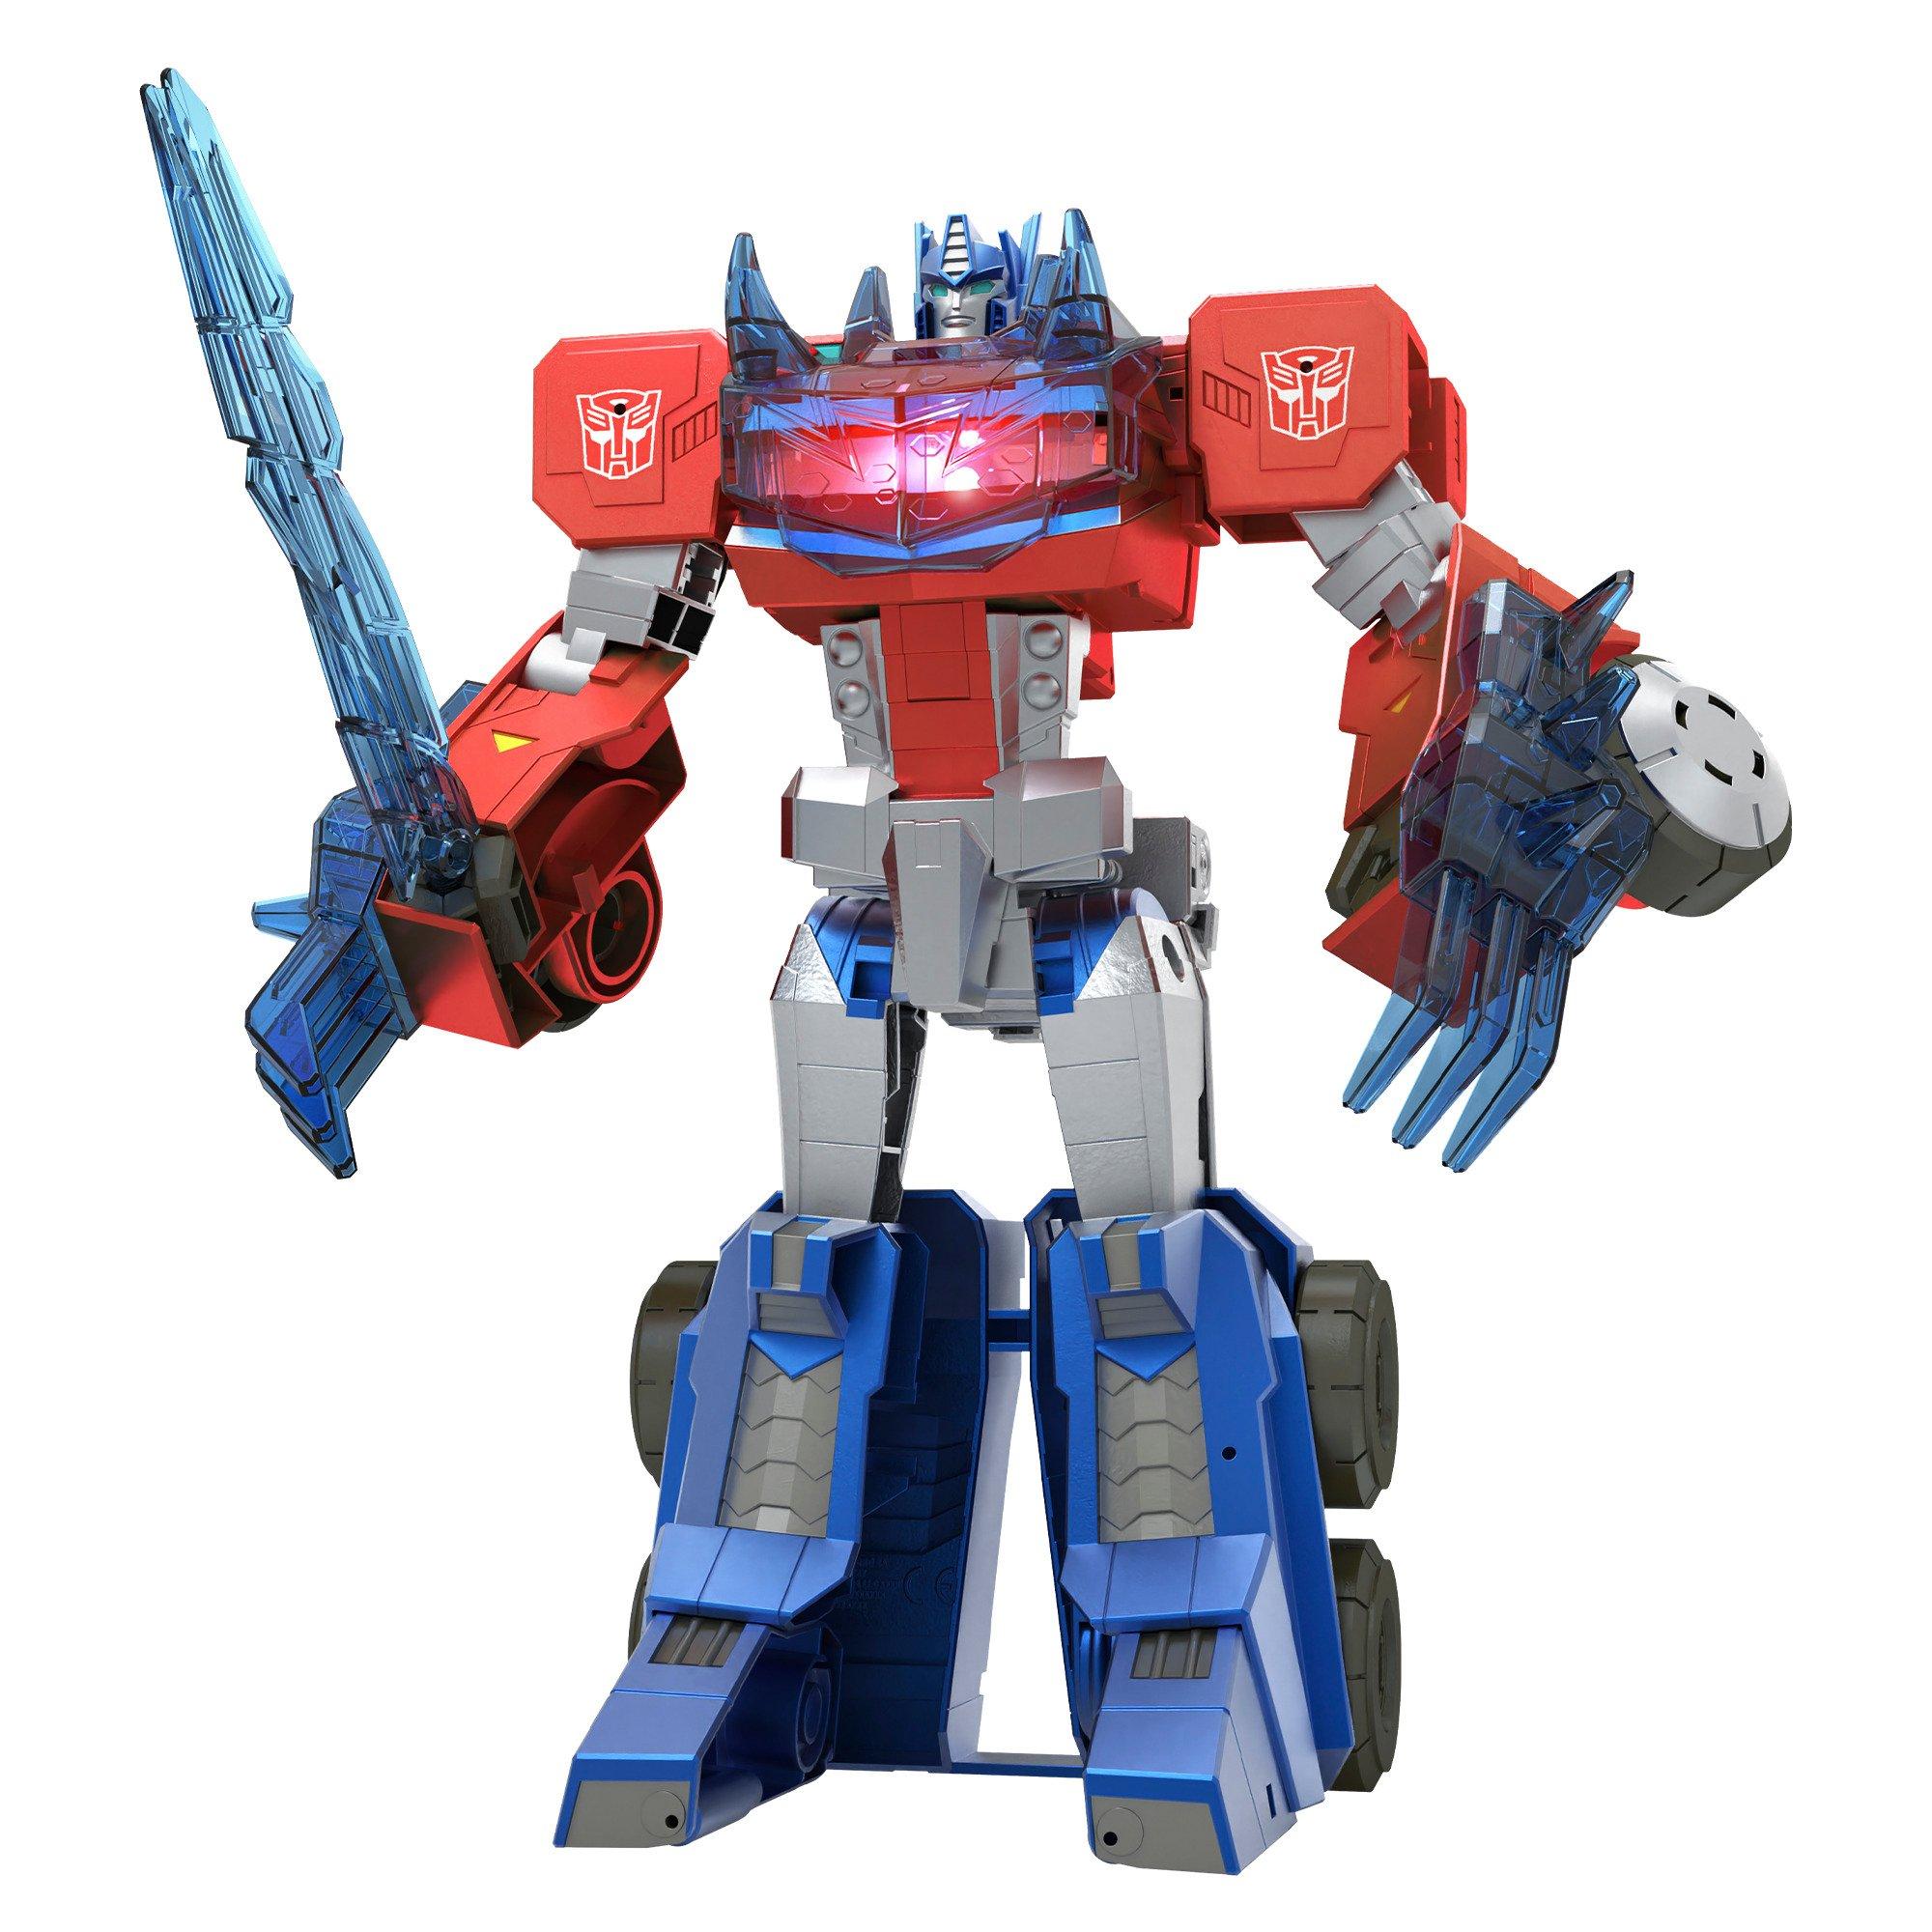 Hasbro Transformers Optimus Prime Autobot Action Figure for sale online